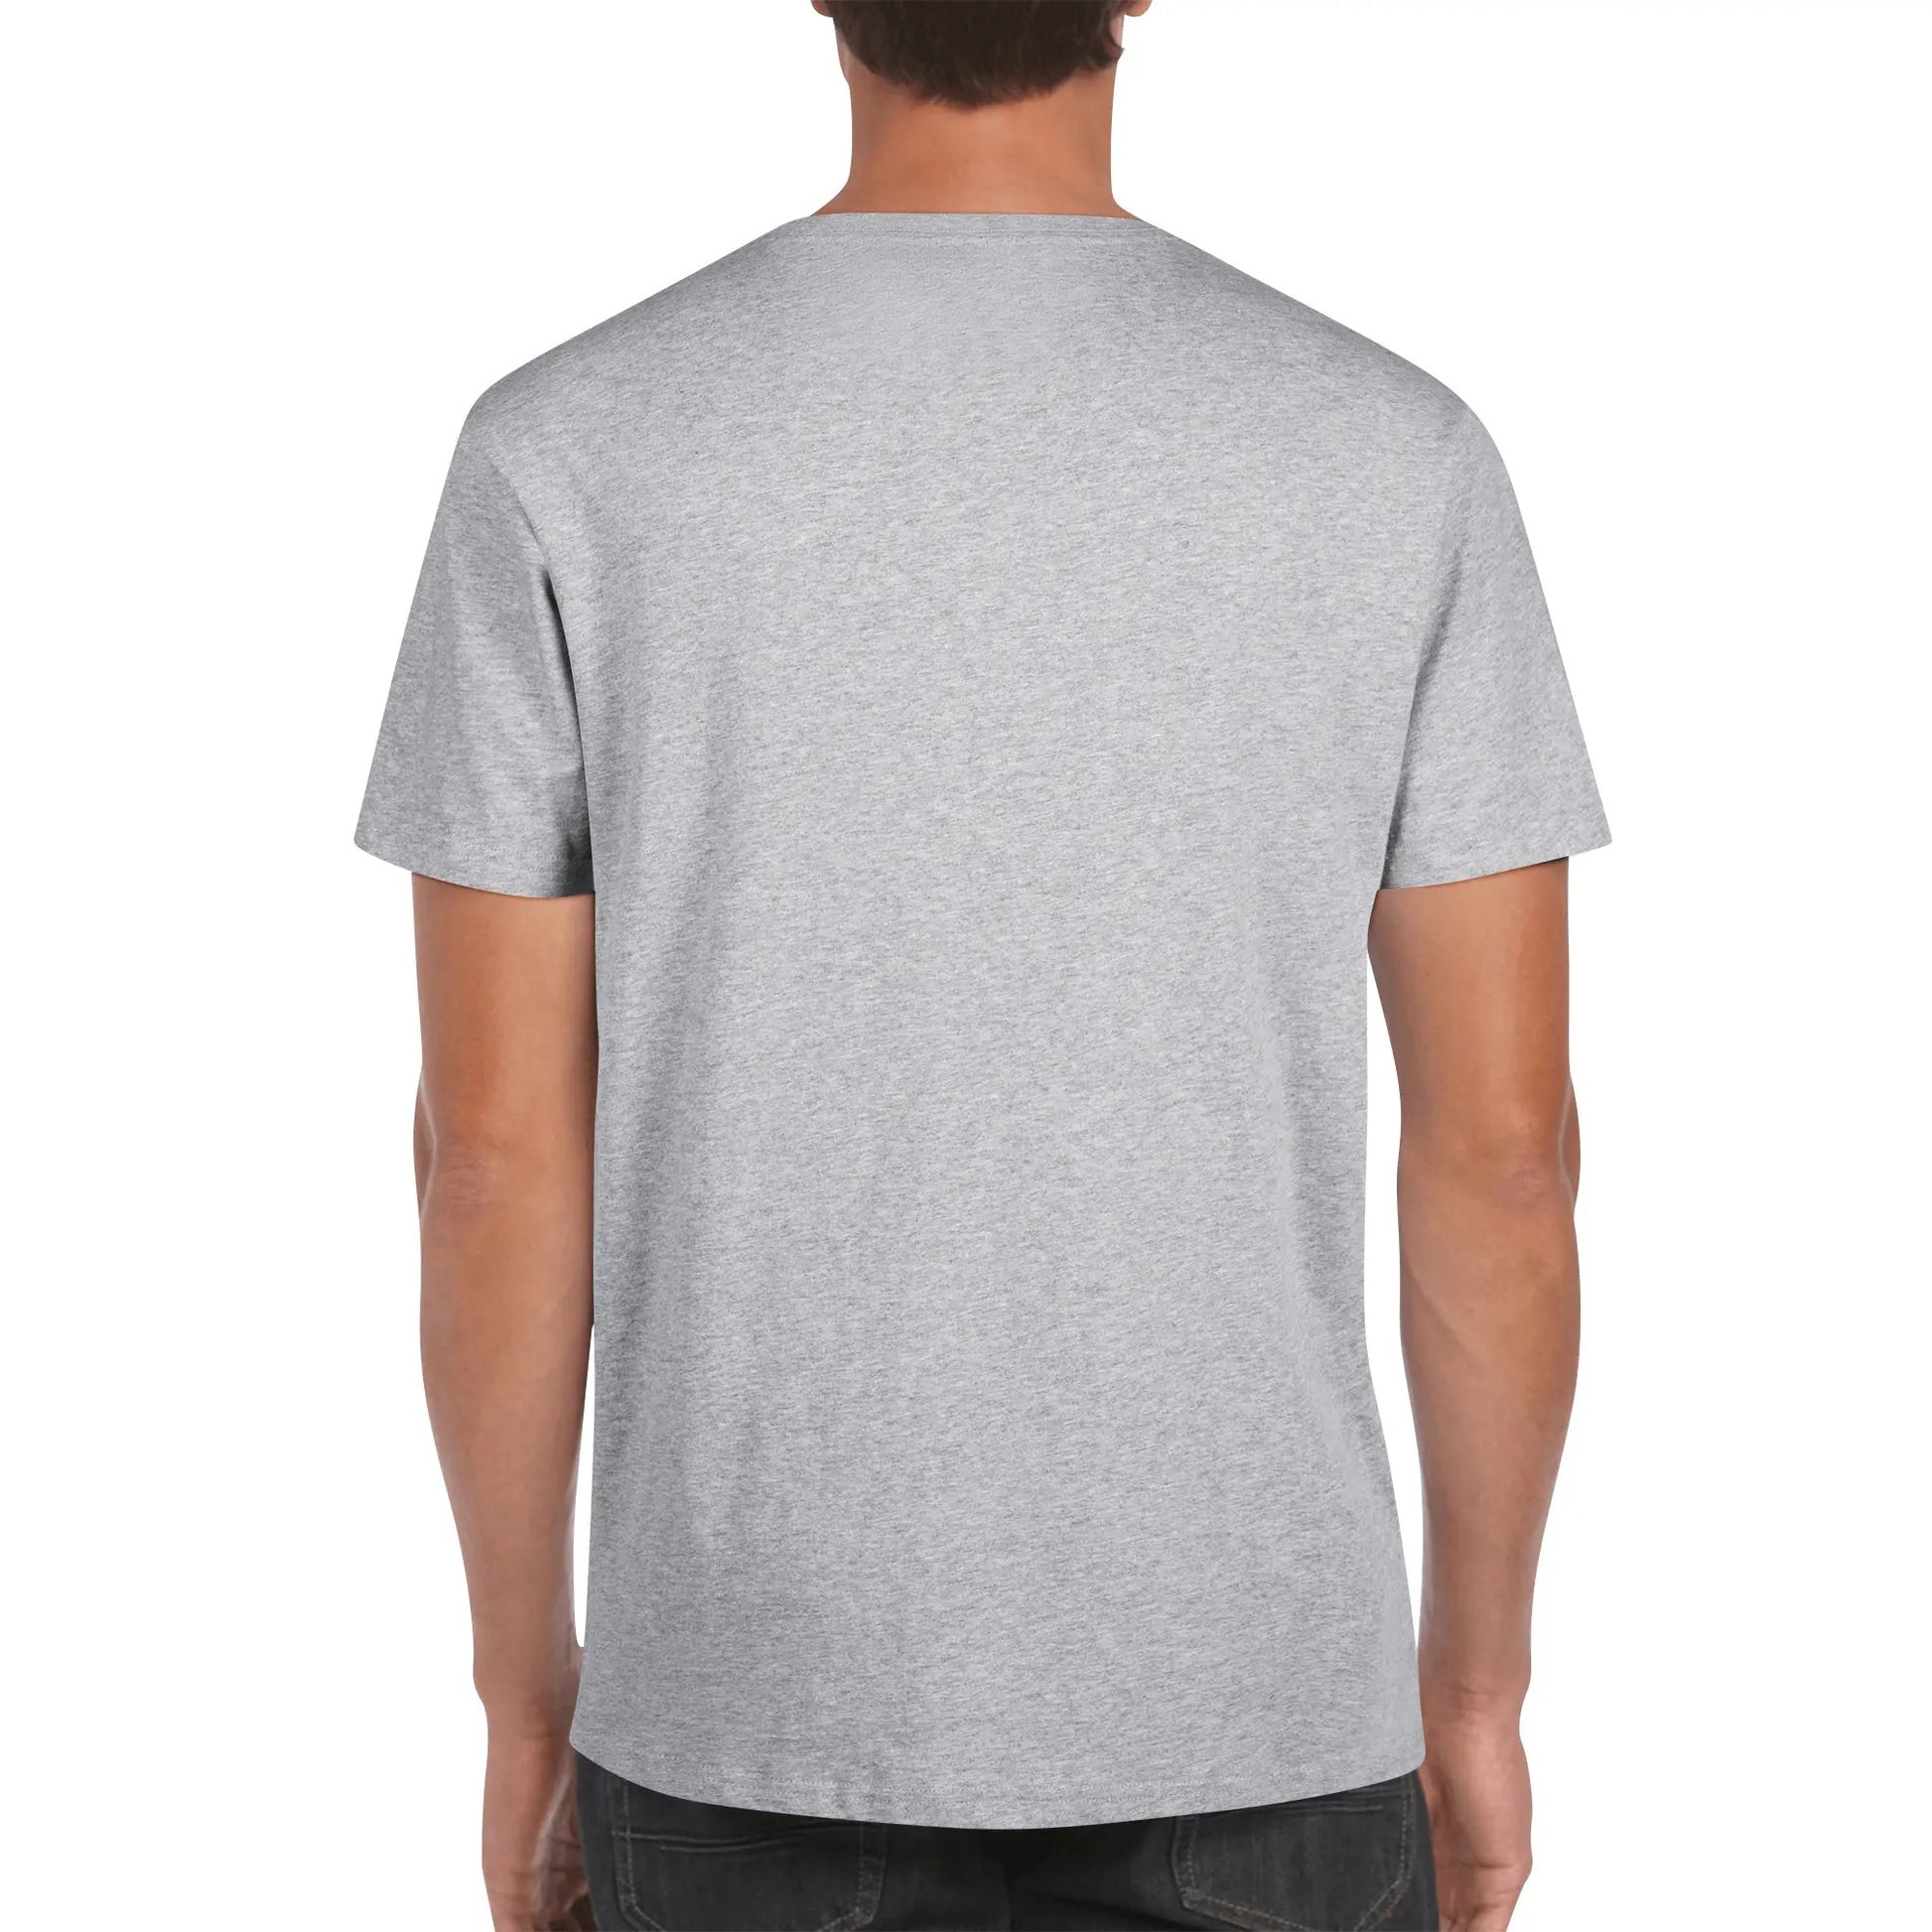 Mens Cotton Front & Back Printing T-Shirt 